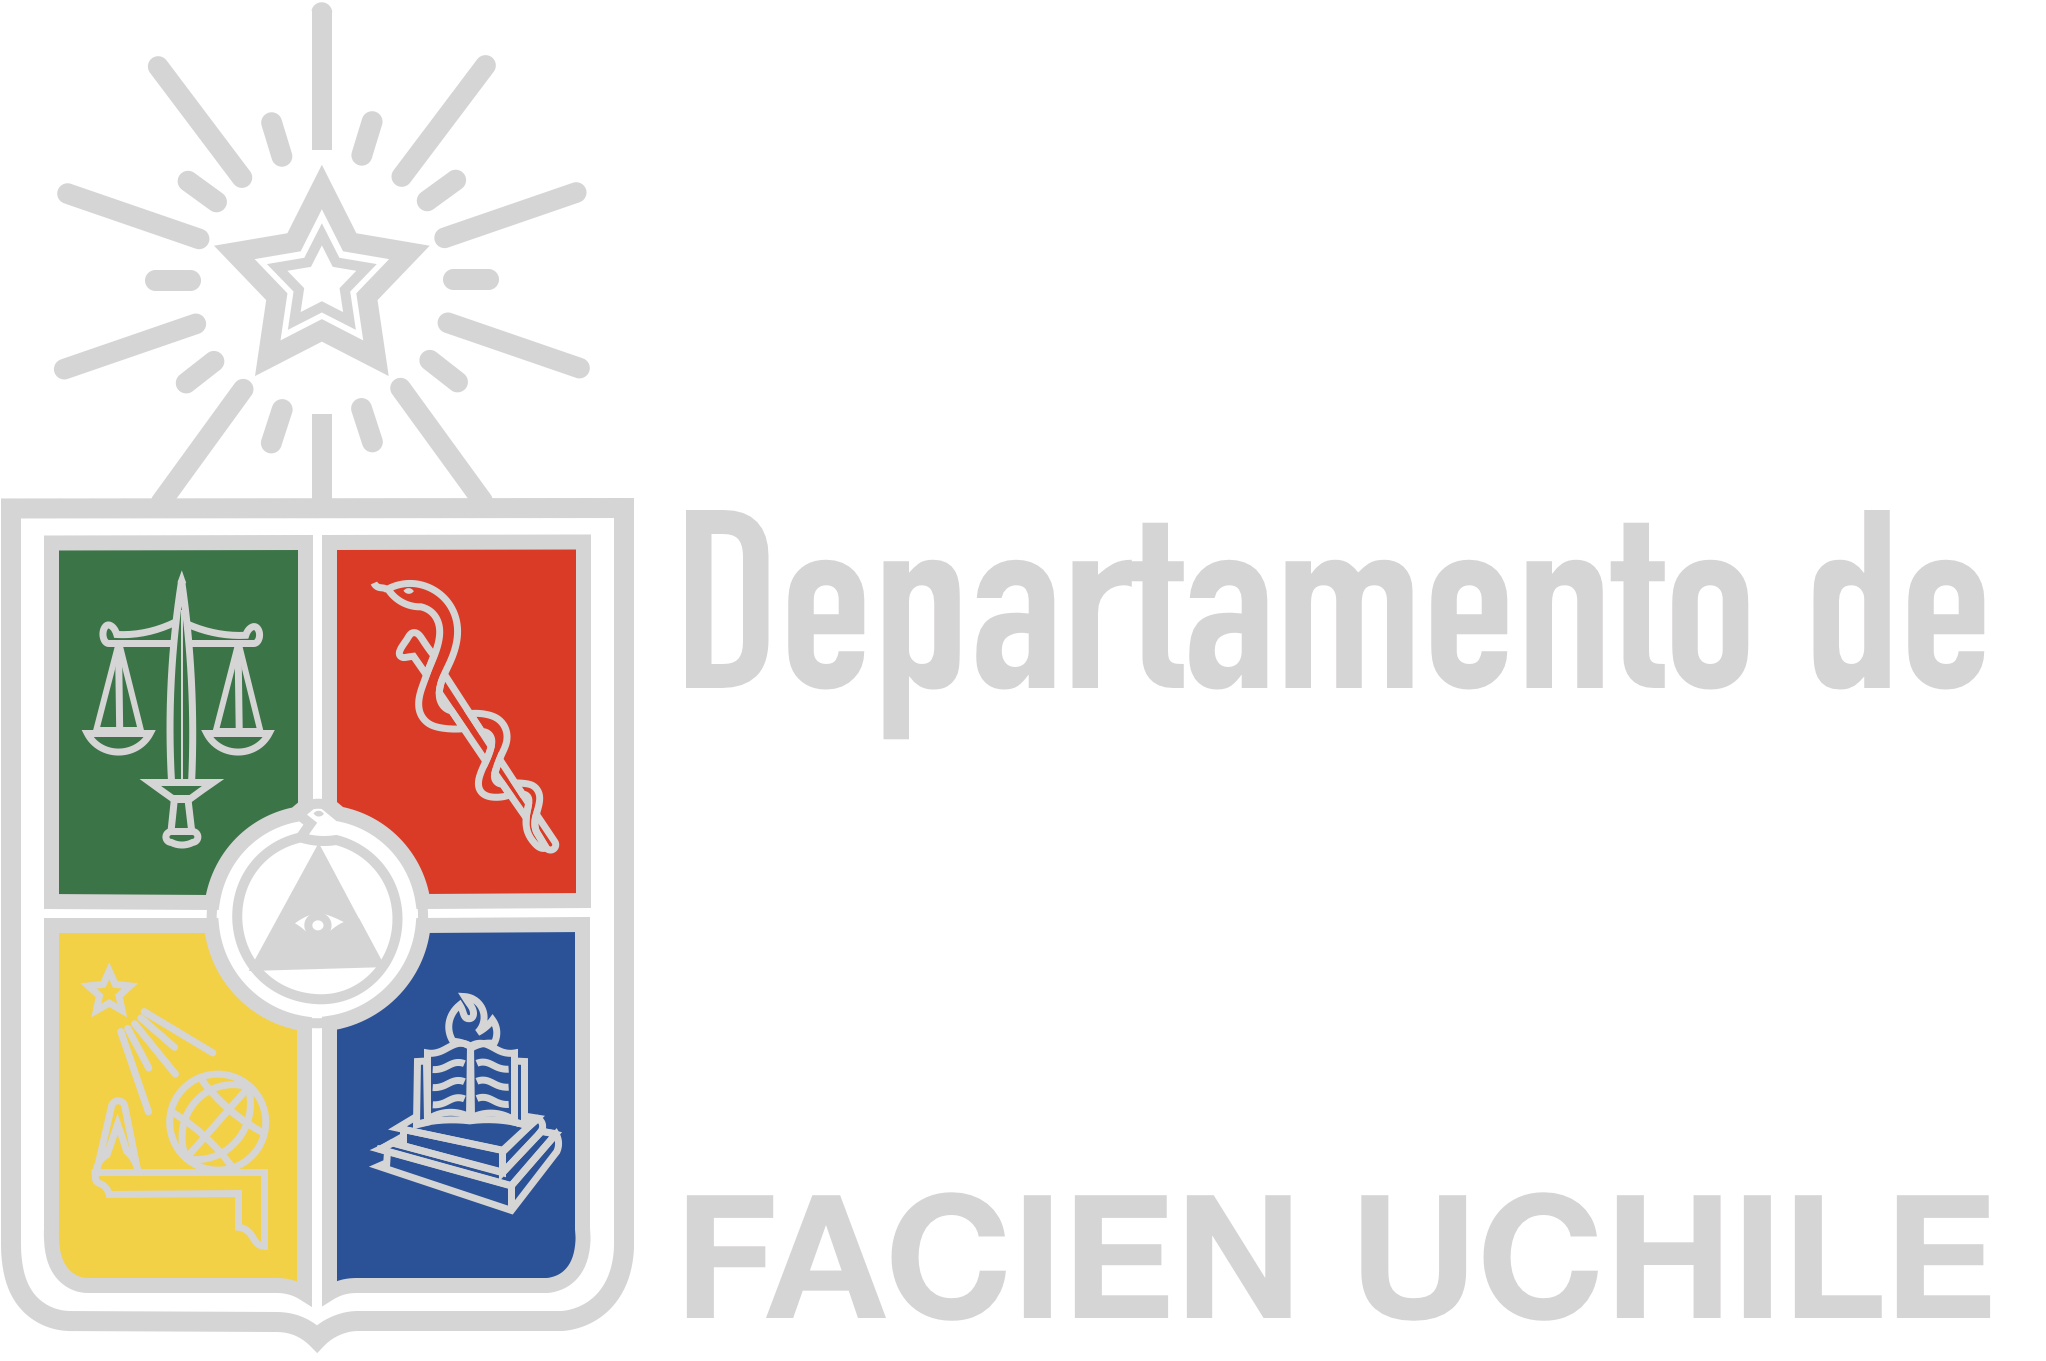 //quimica.ciencias.uchile.cl/dqca/wp-content/uploads/2019/11/uchile-escudo-8.png